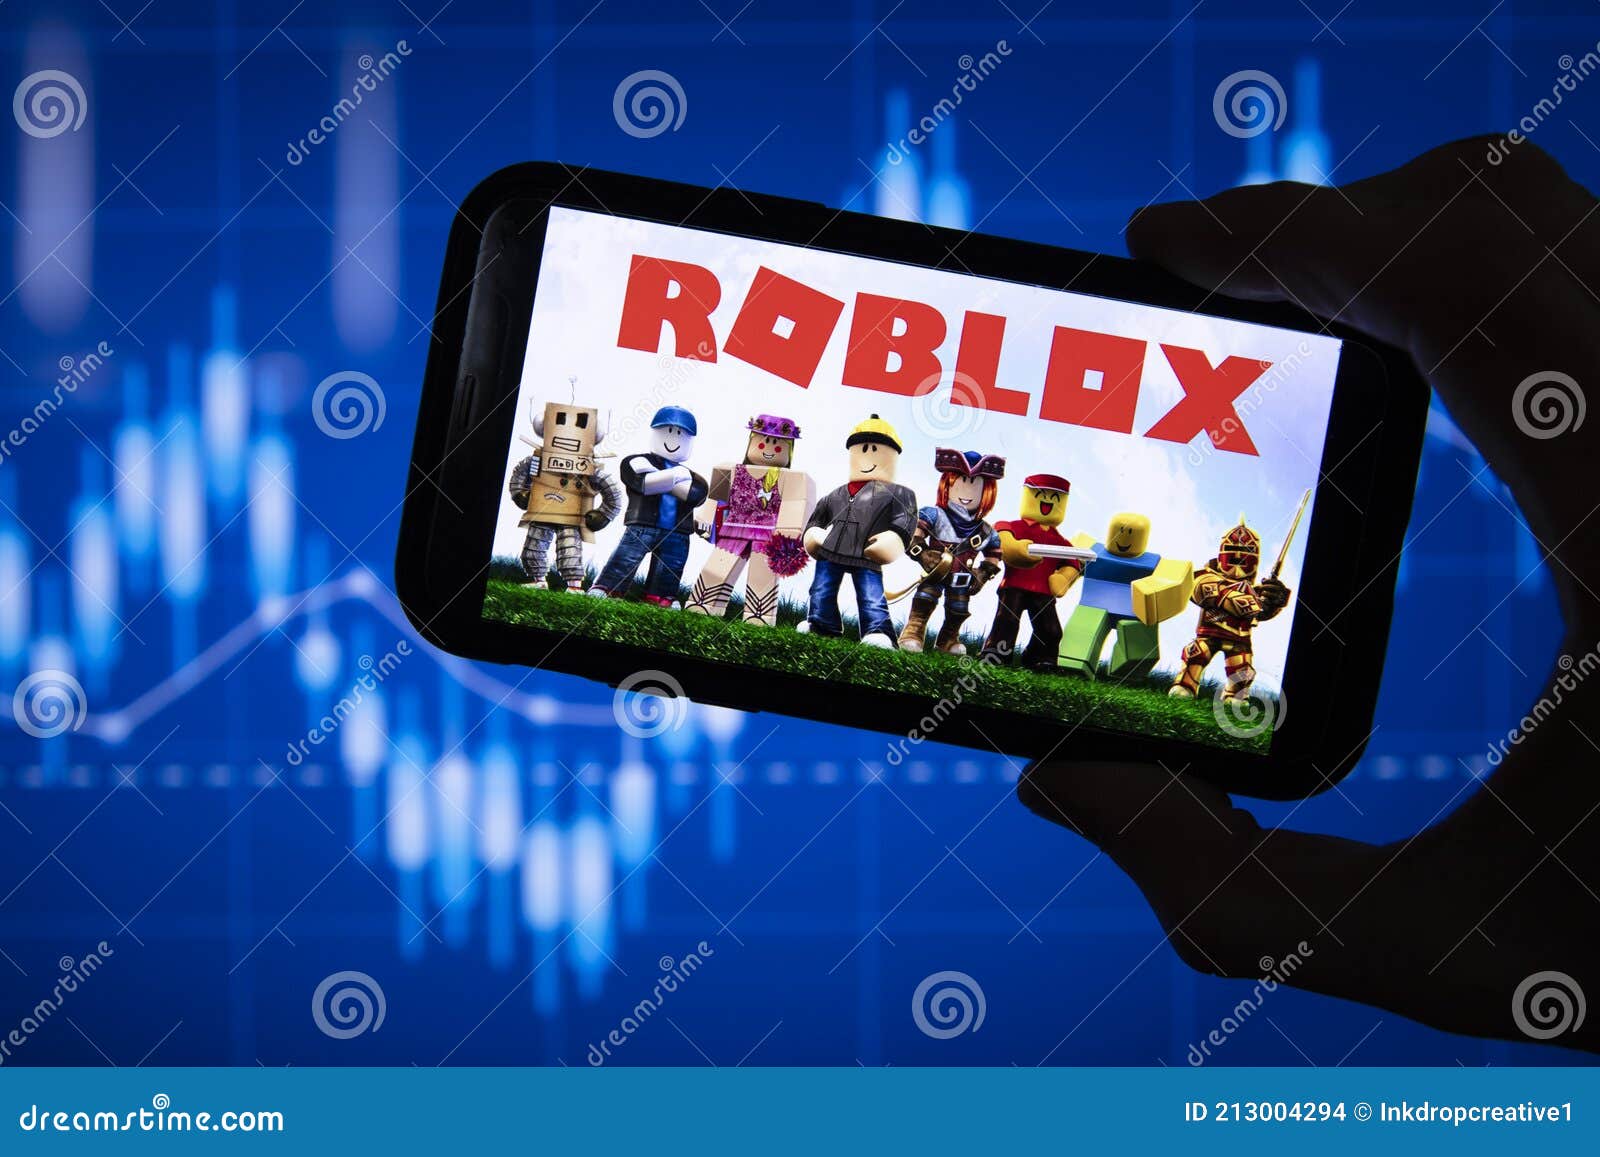 Roblox Website Stock Photos - Free & Royalty-Free Stock Photos